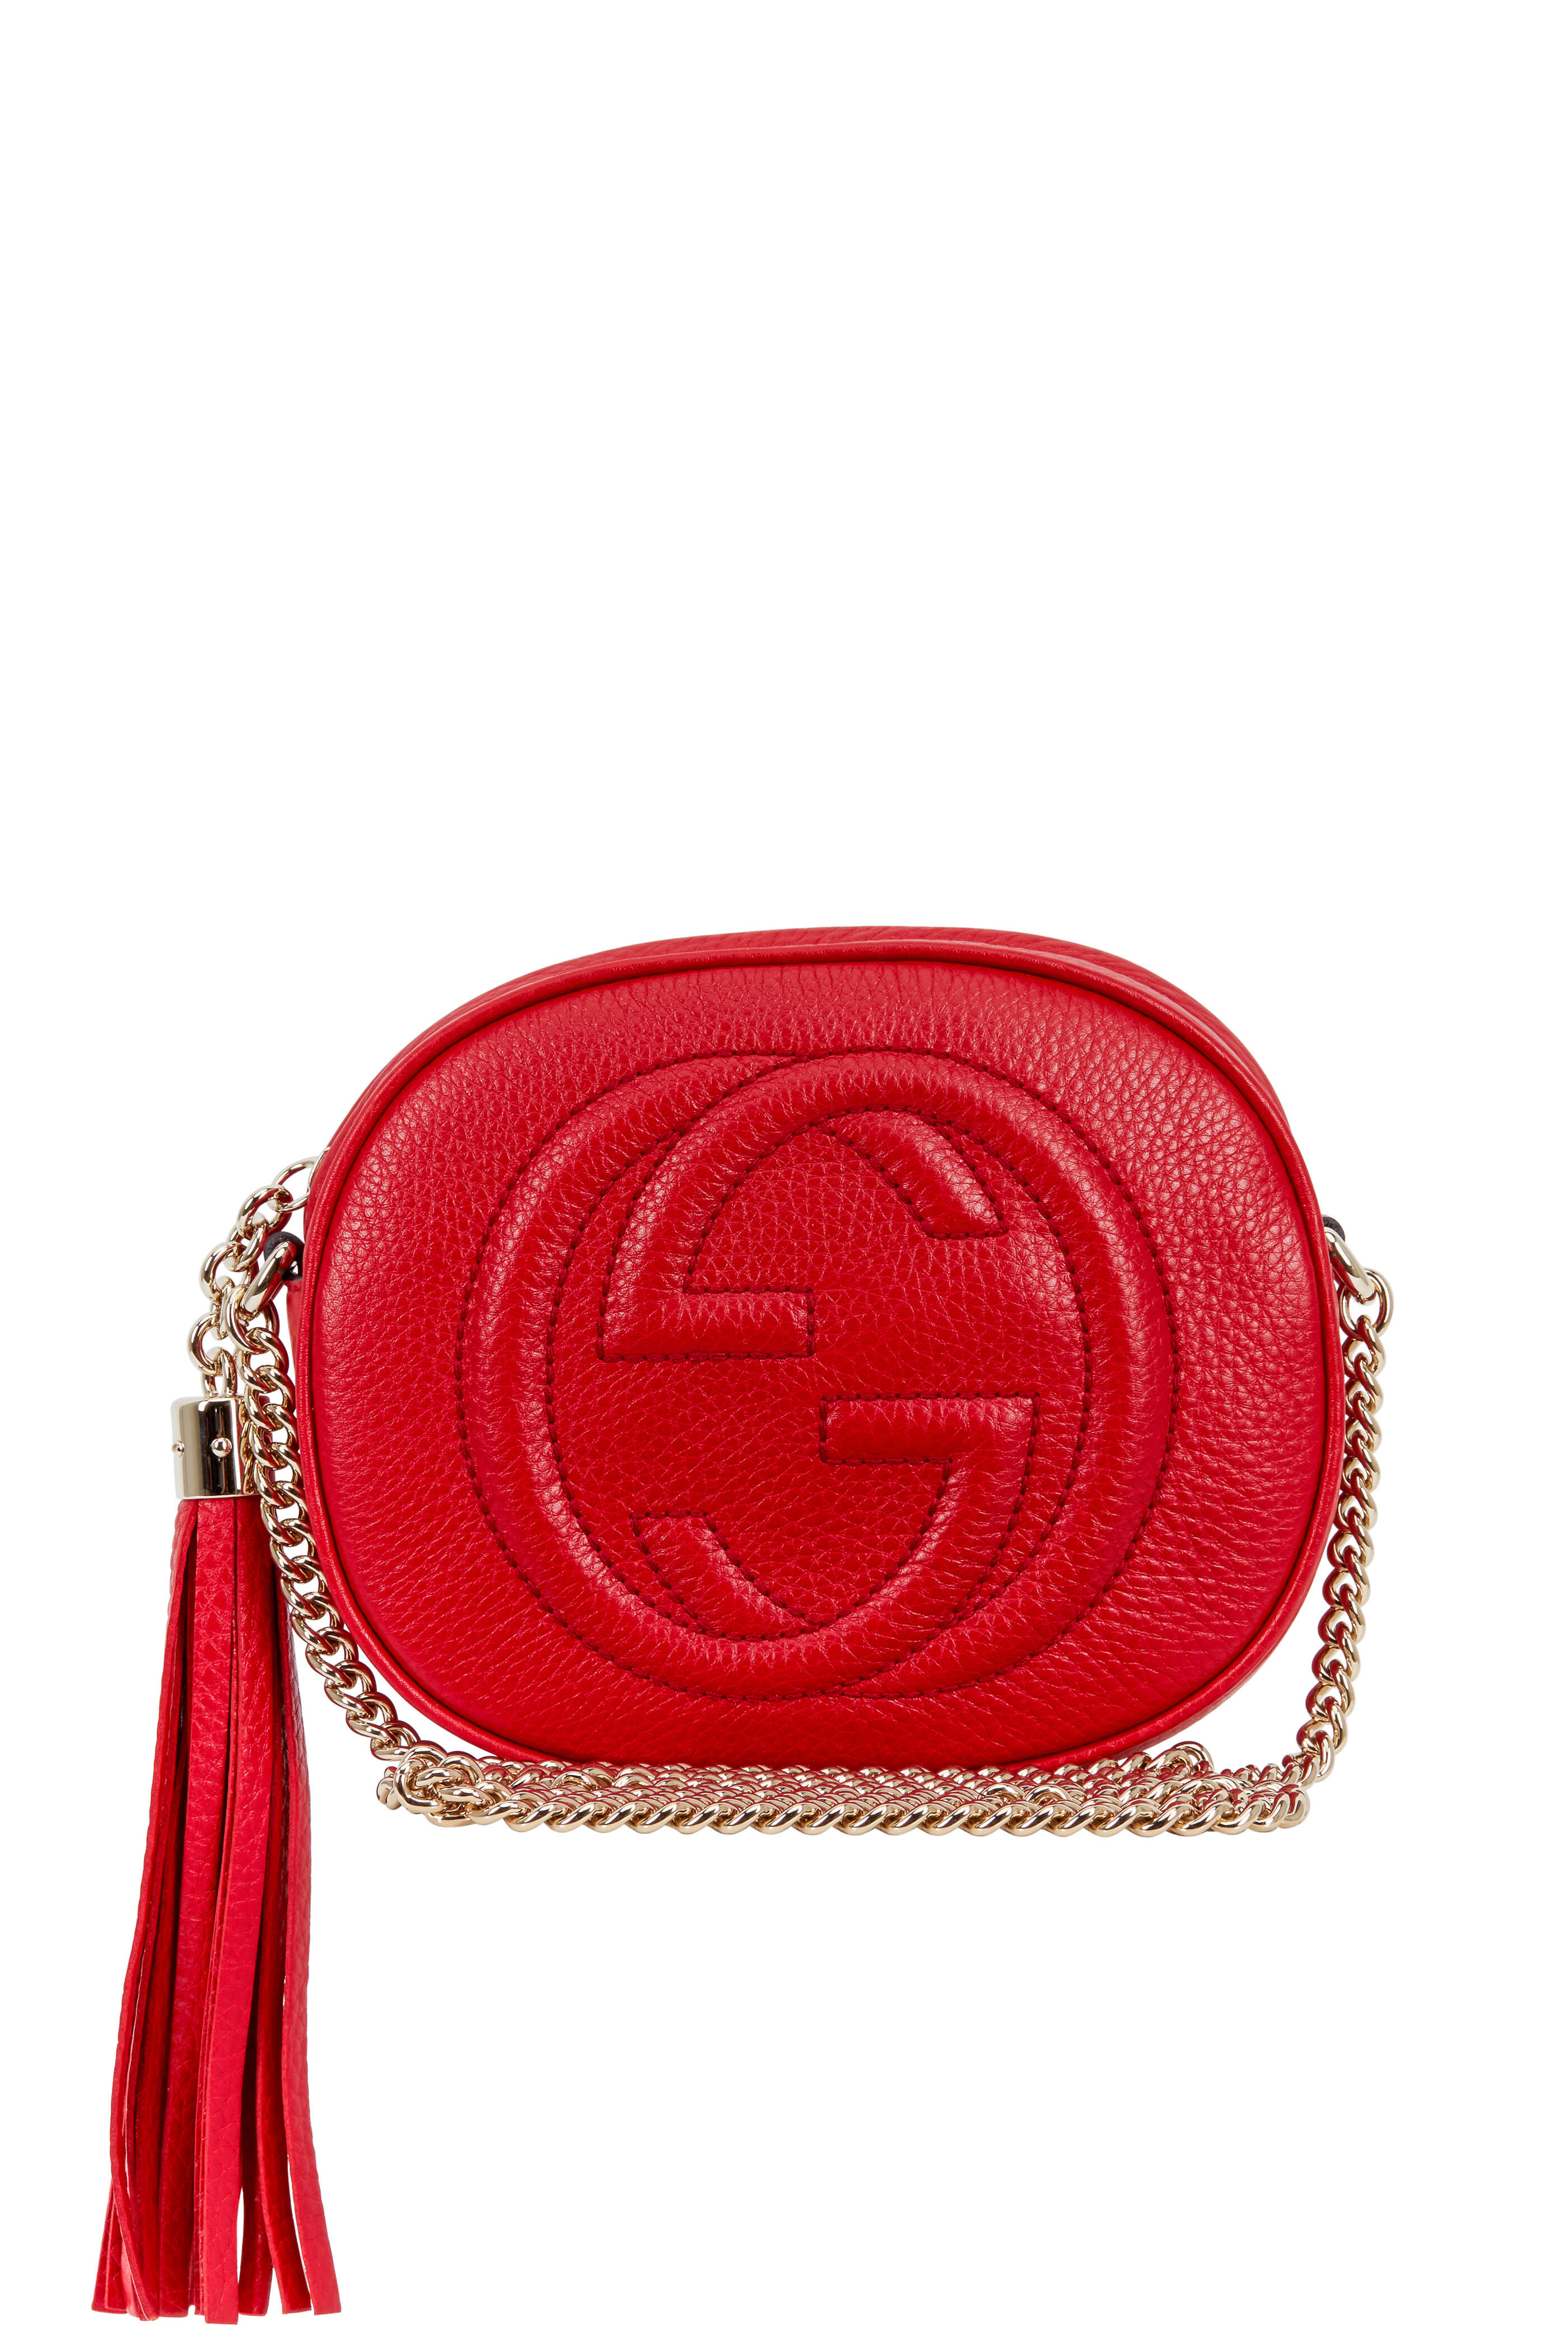 Gucci Disco Bag in Red